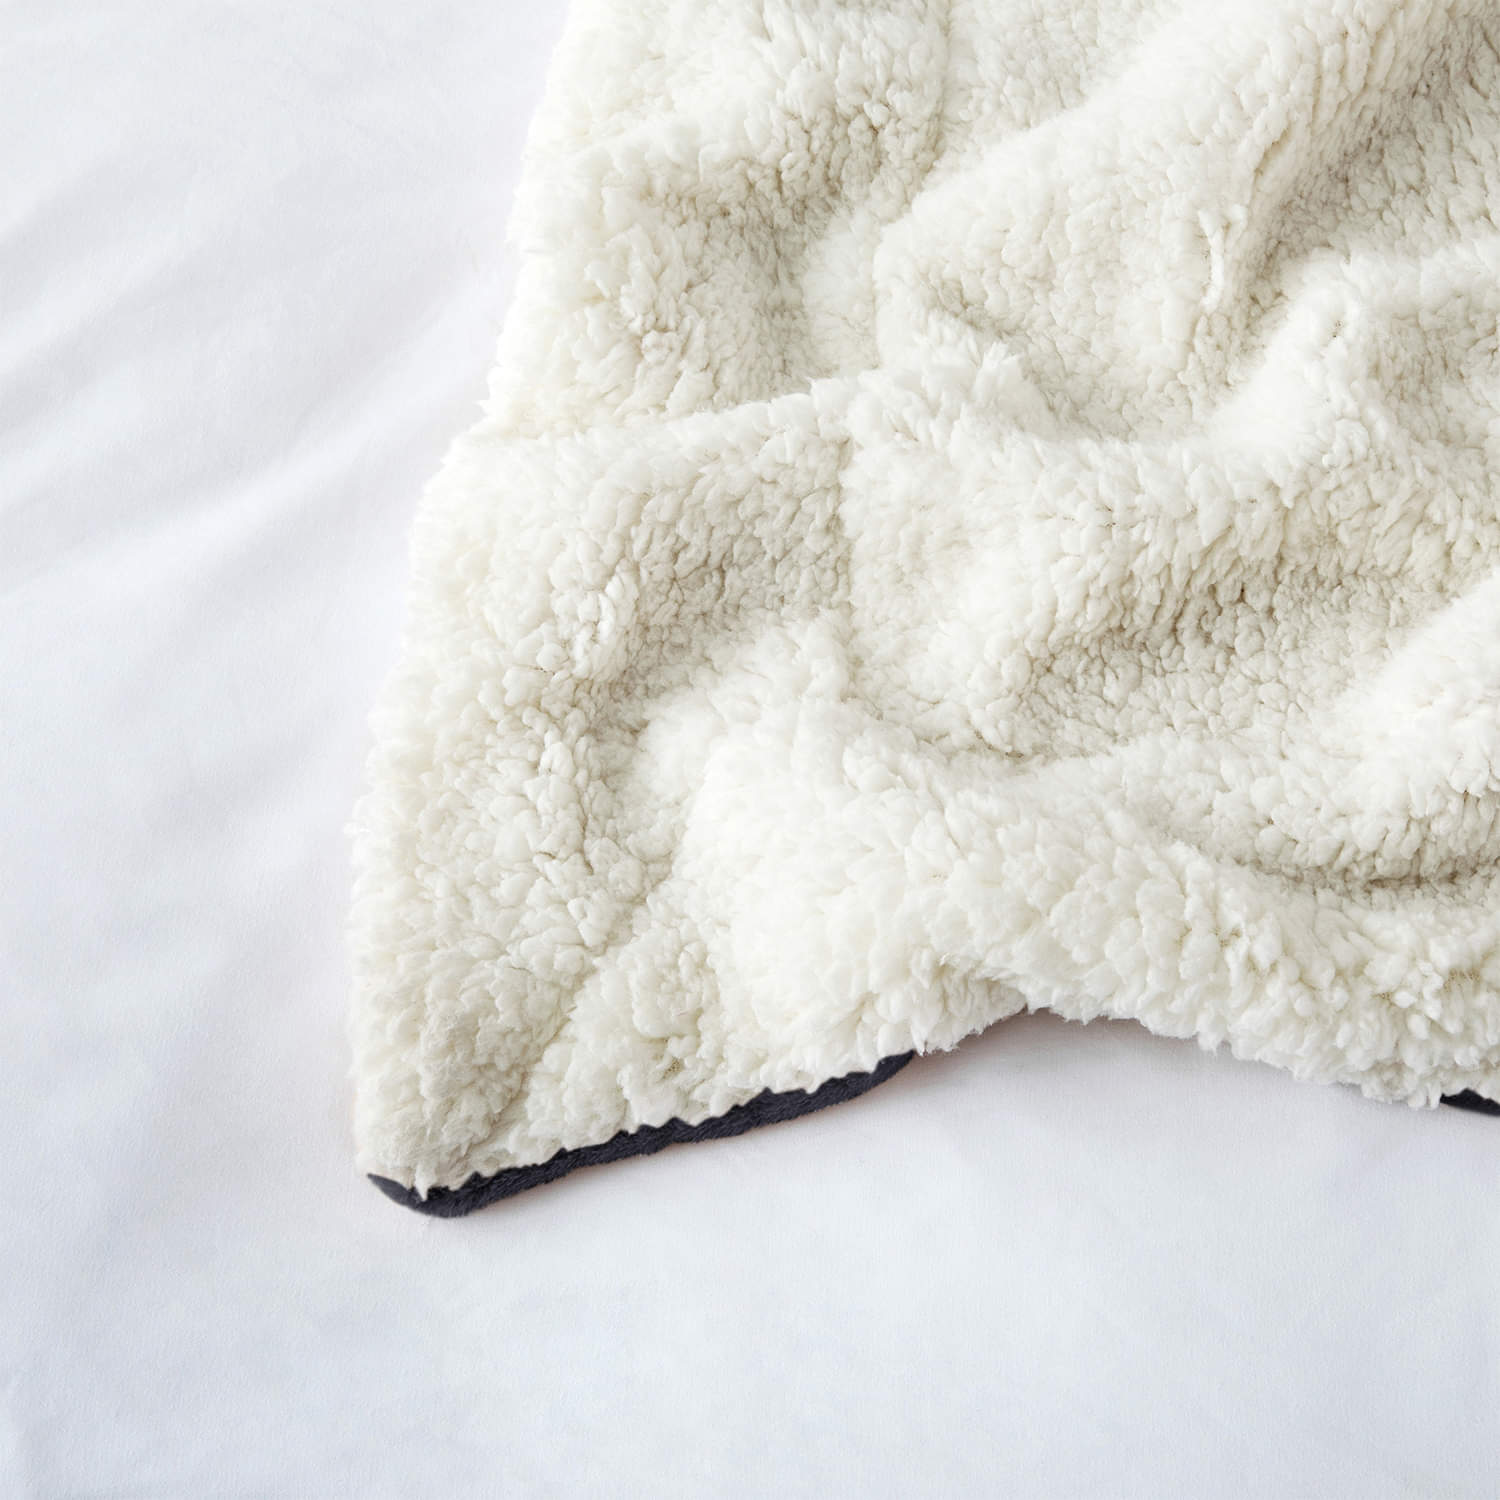 Ultra Soft Sherpa Throw Blanket - Charcoal